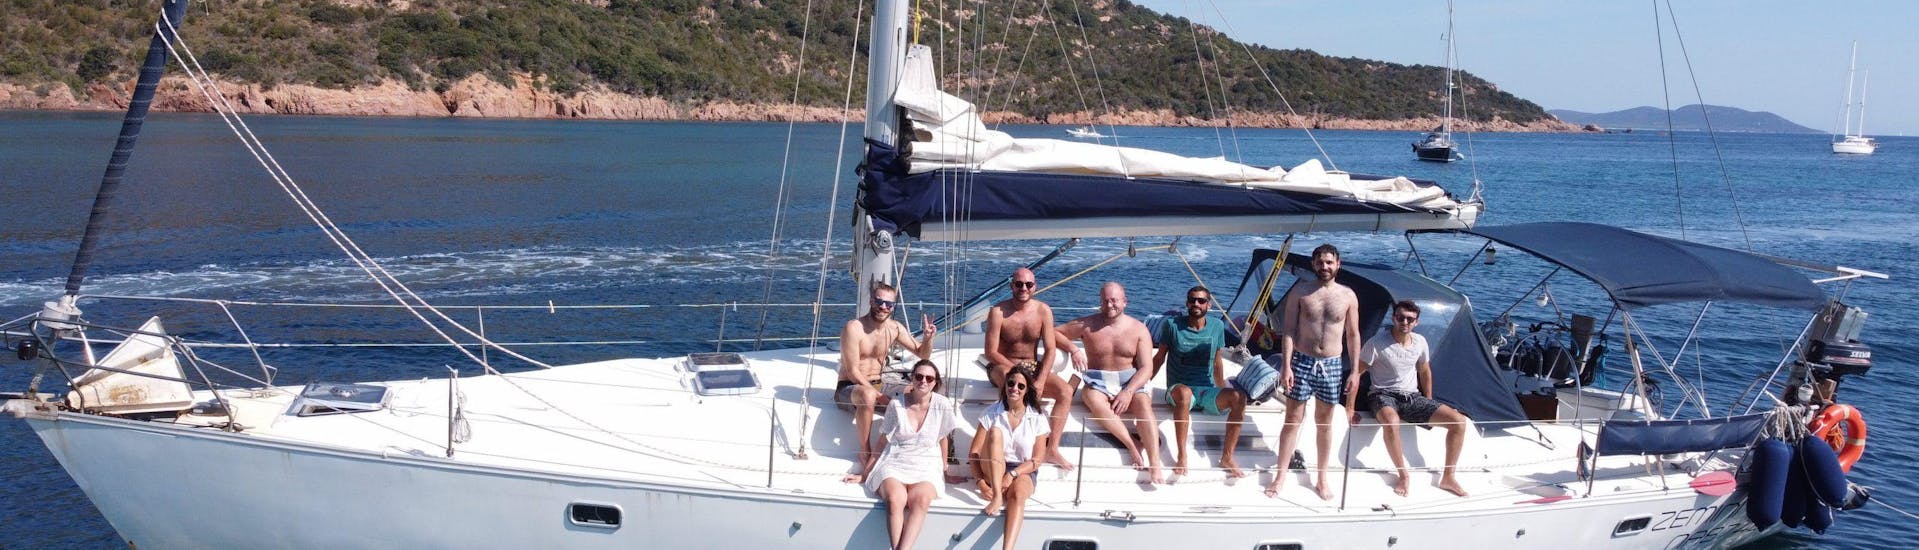 Our sailboat sailing through Sardinian waters during a trip with Sailing in Sardinia.